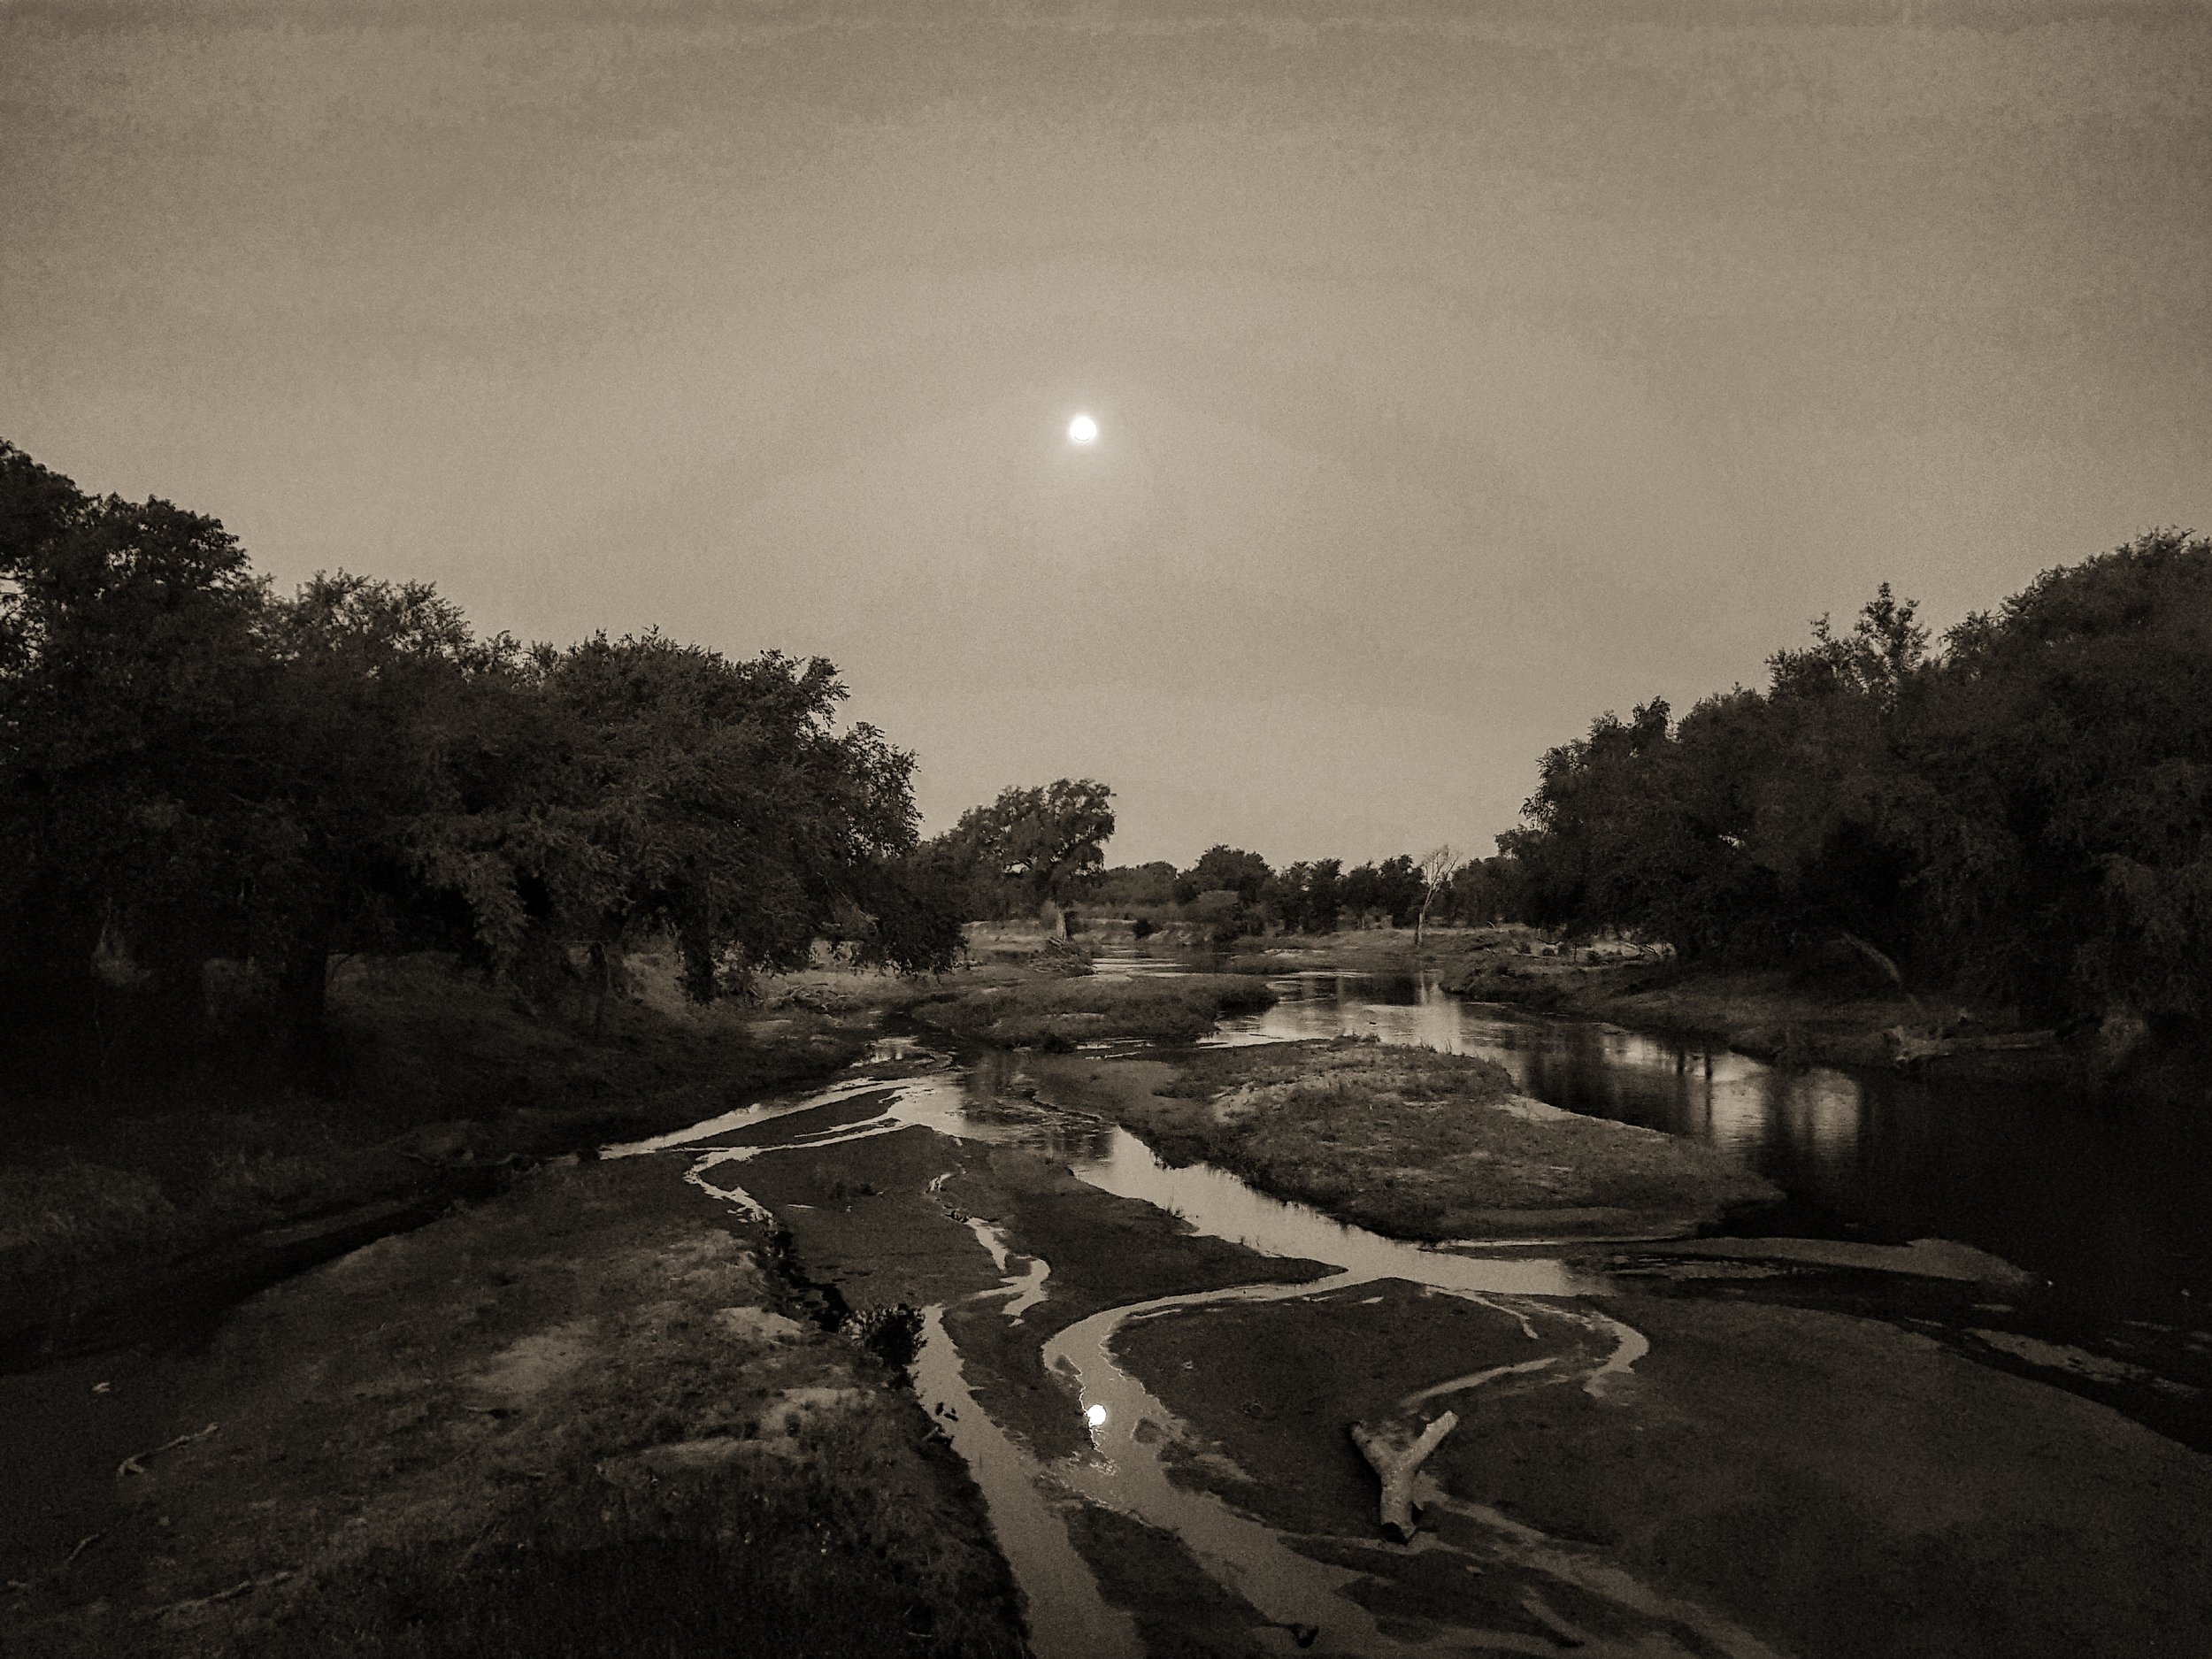 LUVUVHU RIVER DROUGHT: The Luvuvhu river at full moon.